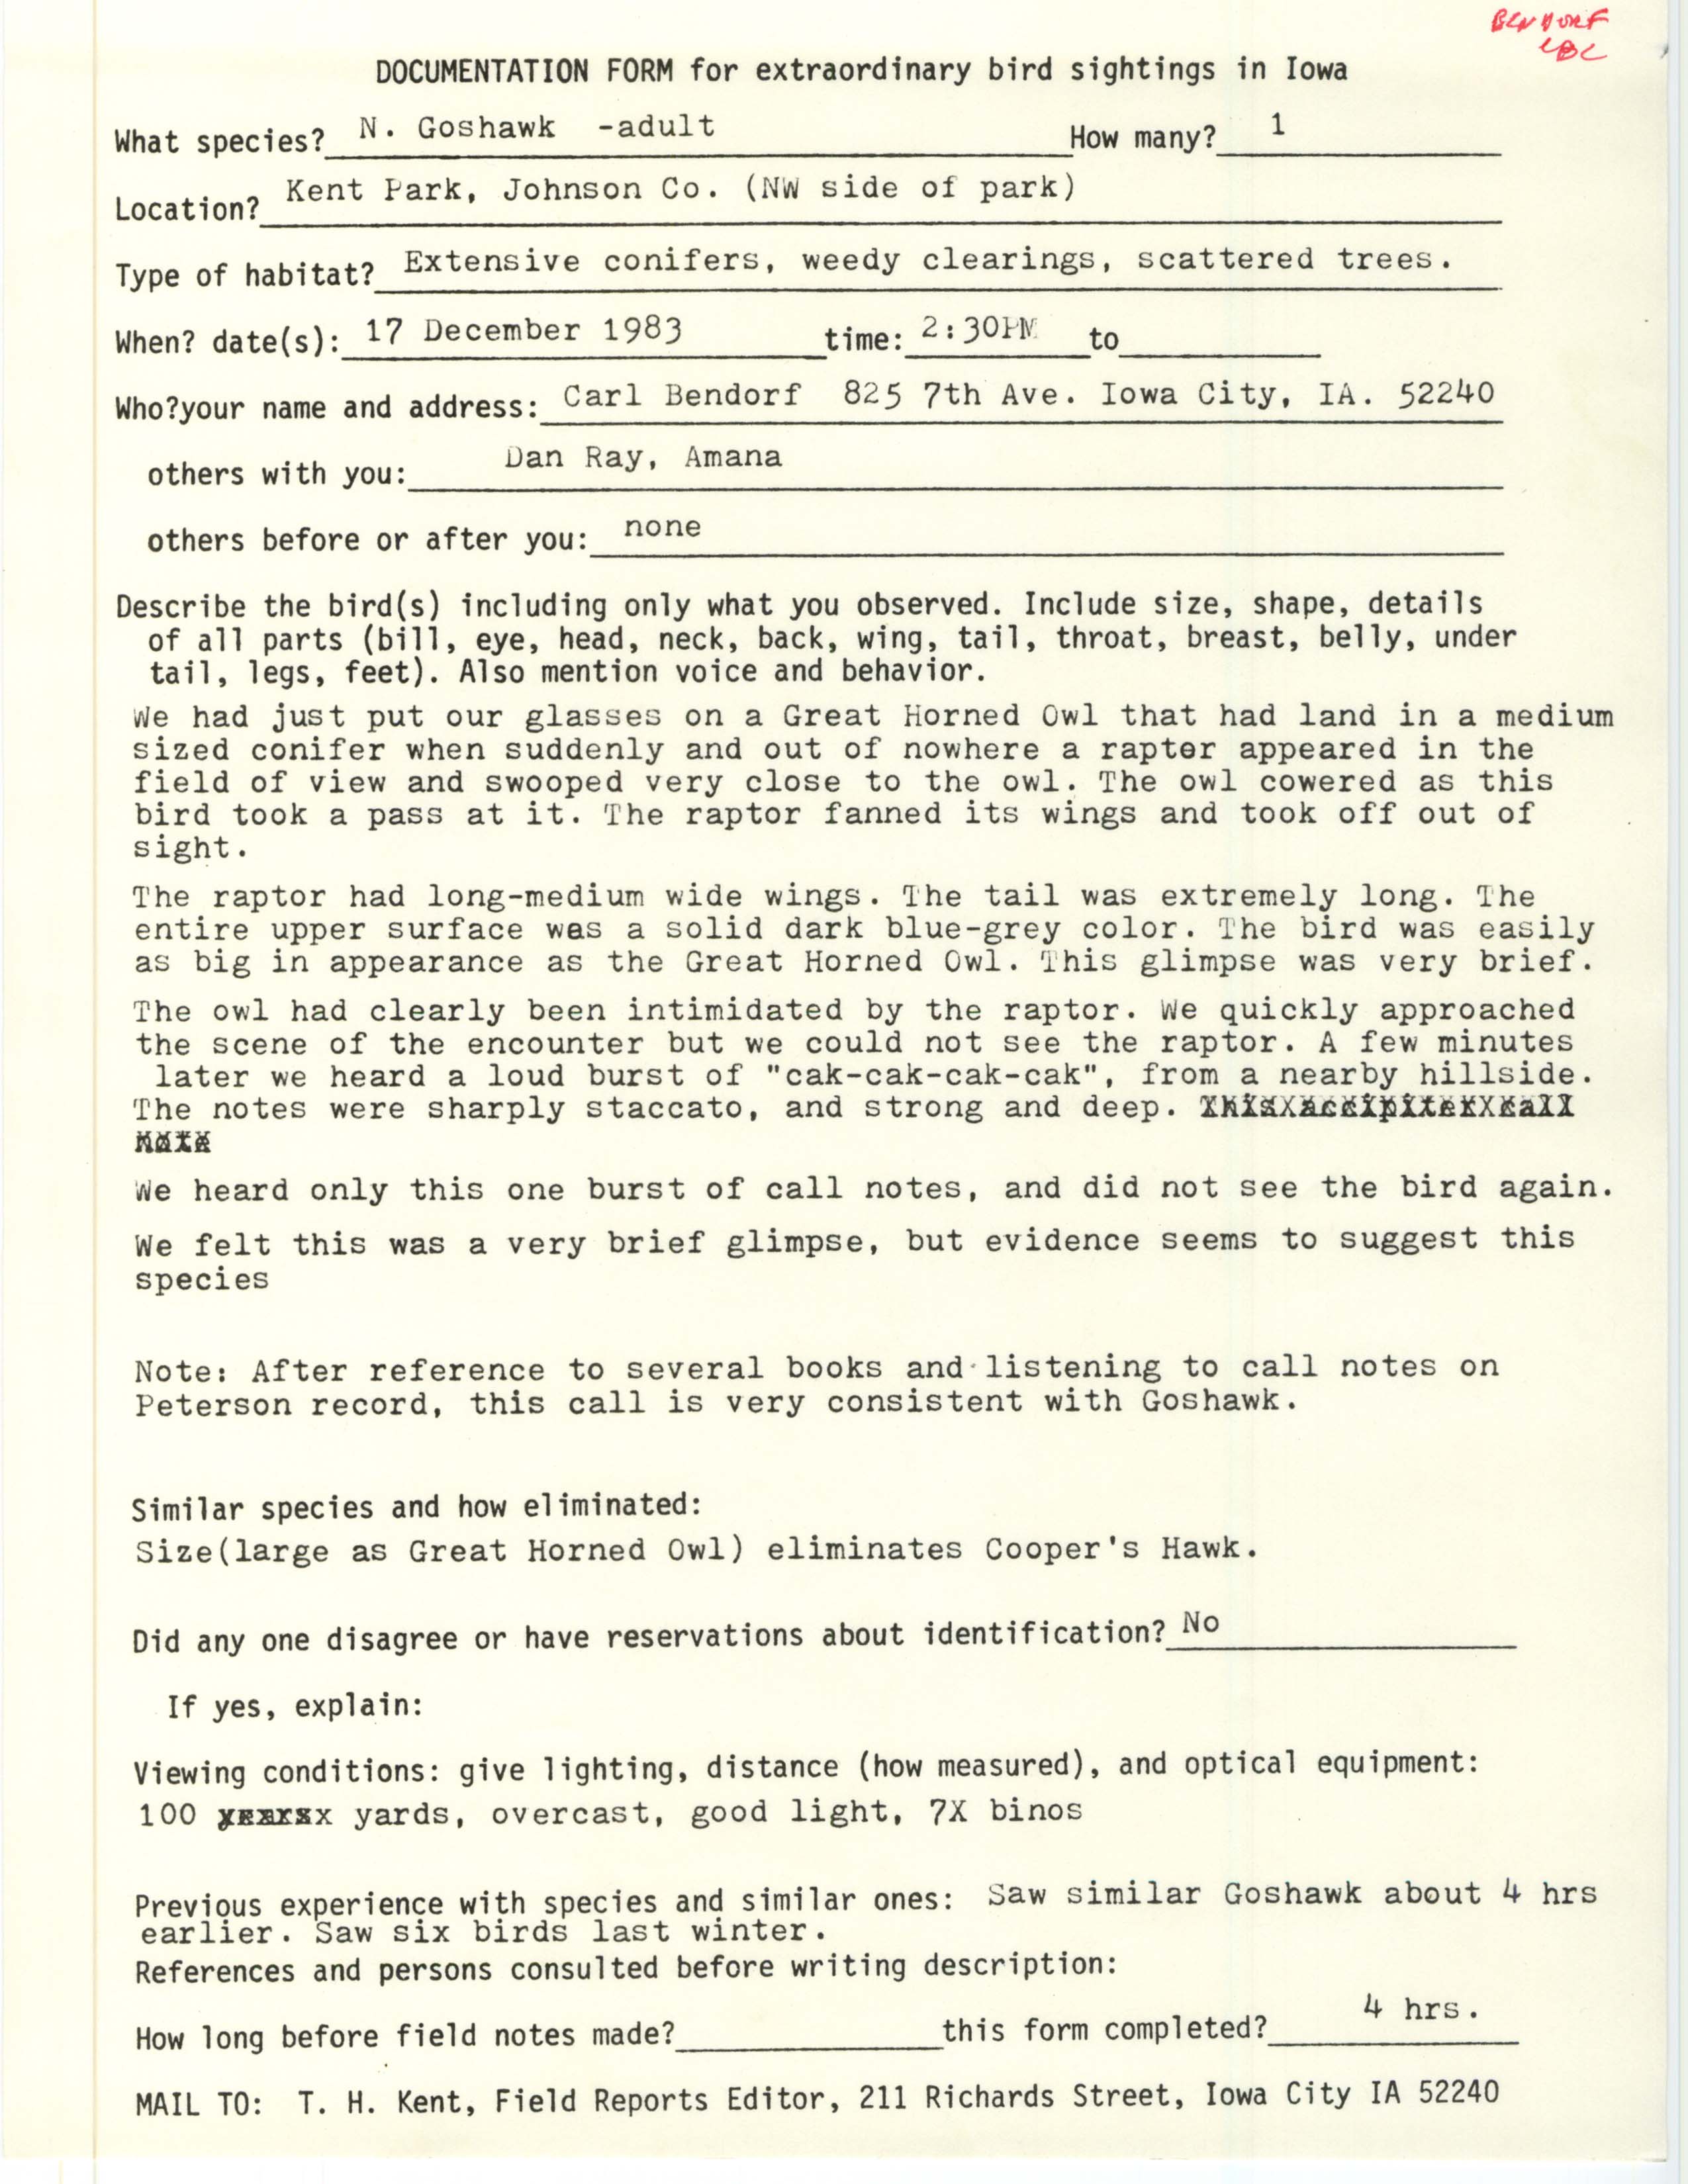 Rare bird documentation form for Northern Goshawk at Kent Park, 1983